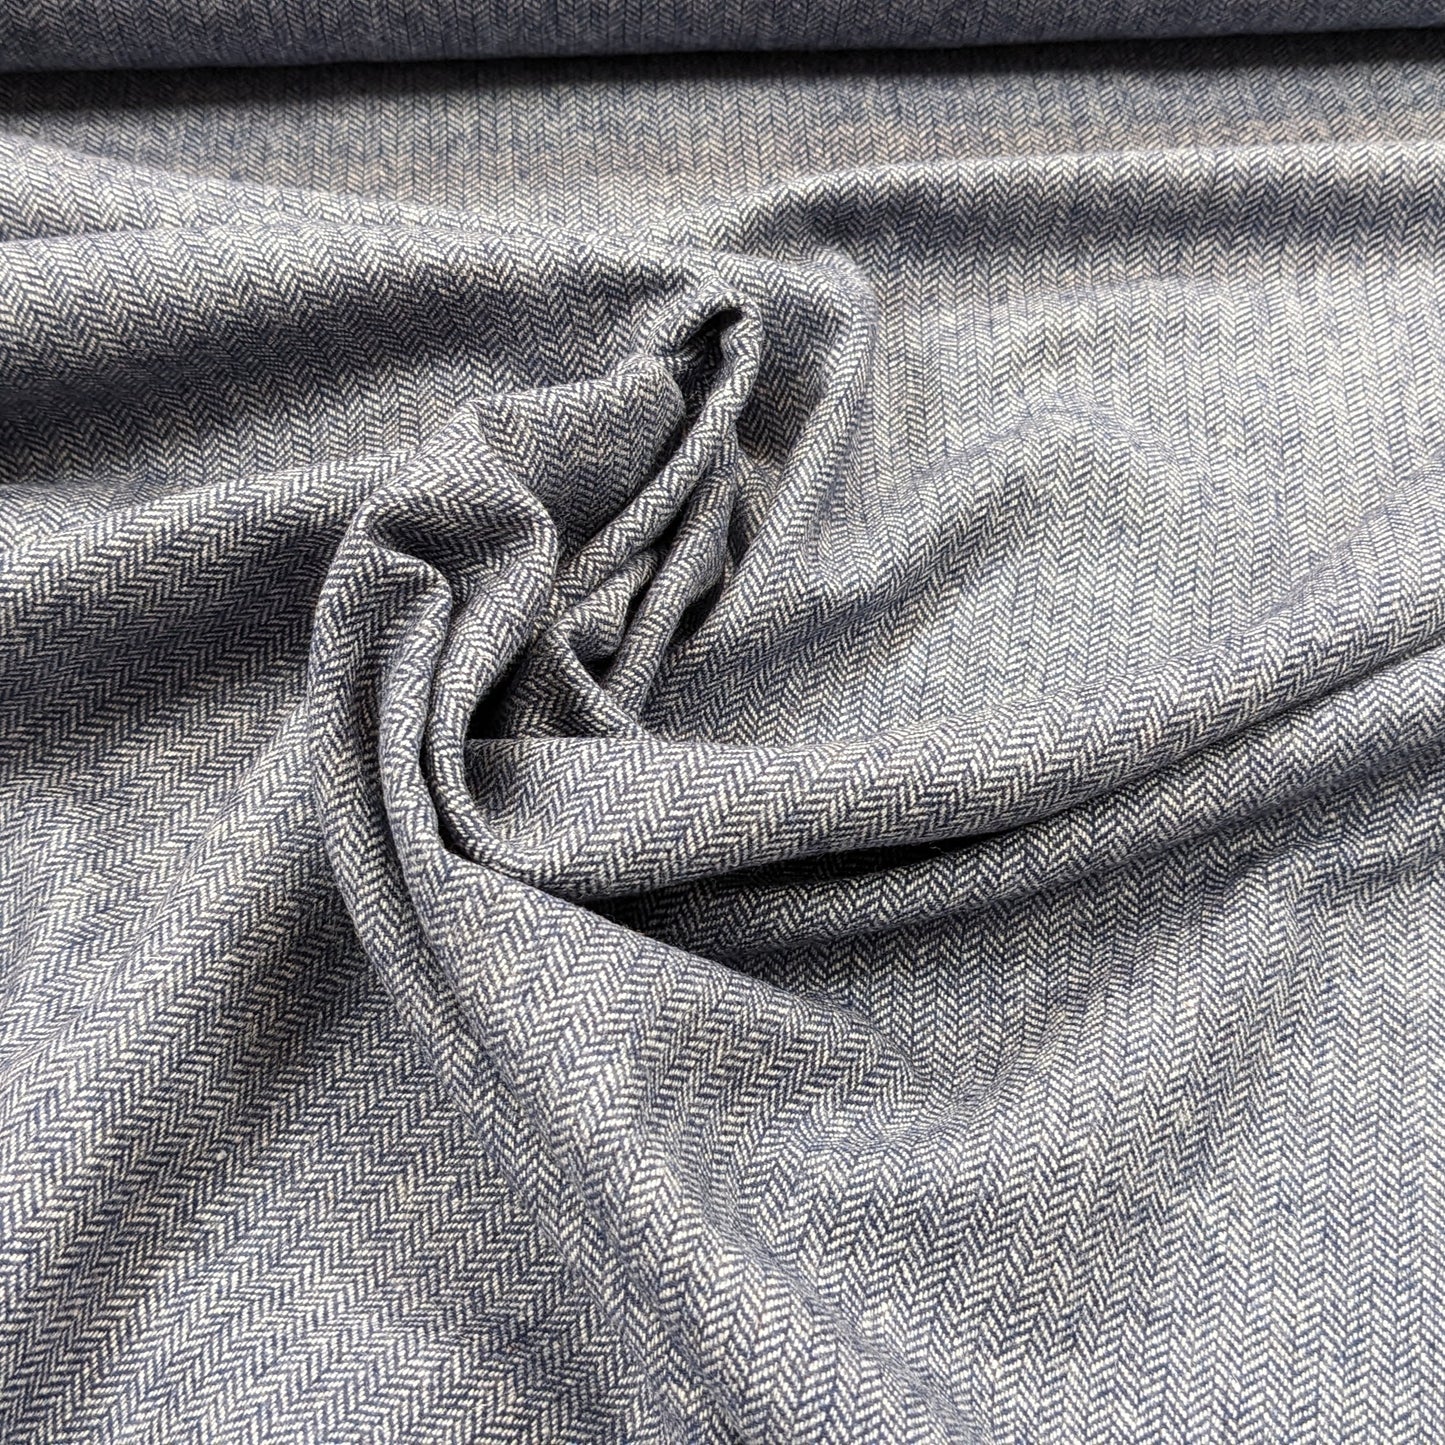 Wool and Polyester Herringbone Tweed Fabric - Denim Blue